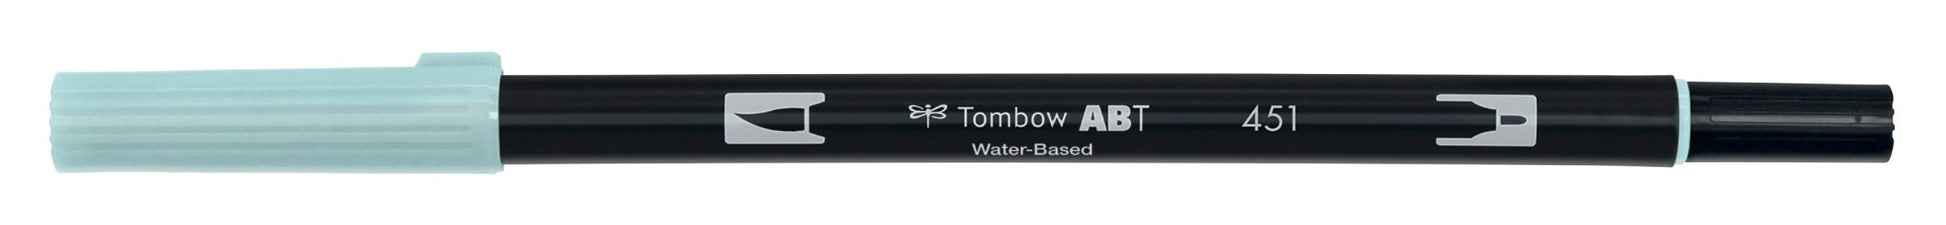 Tombow ABT dual brush pen - single colours - Tombow - Sky blue ABT-451 - millenotes